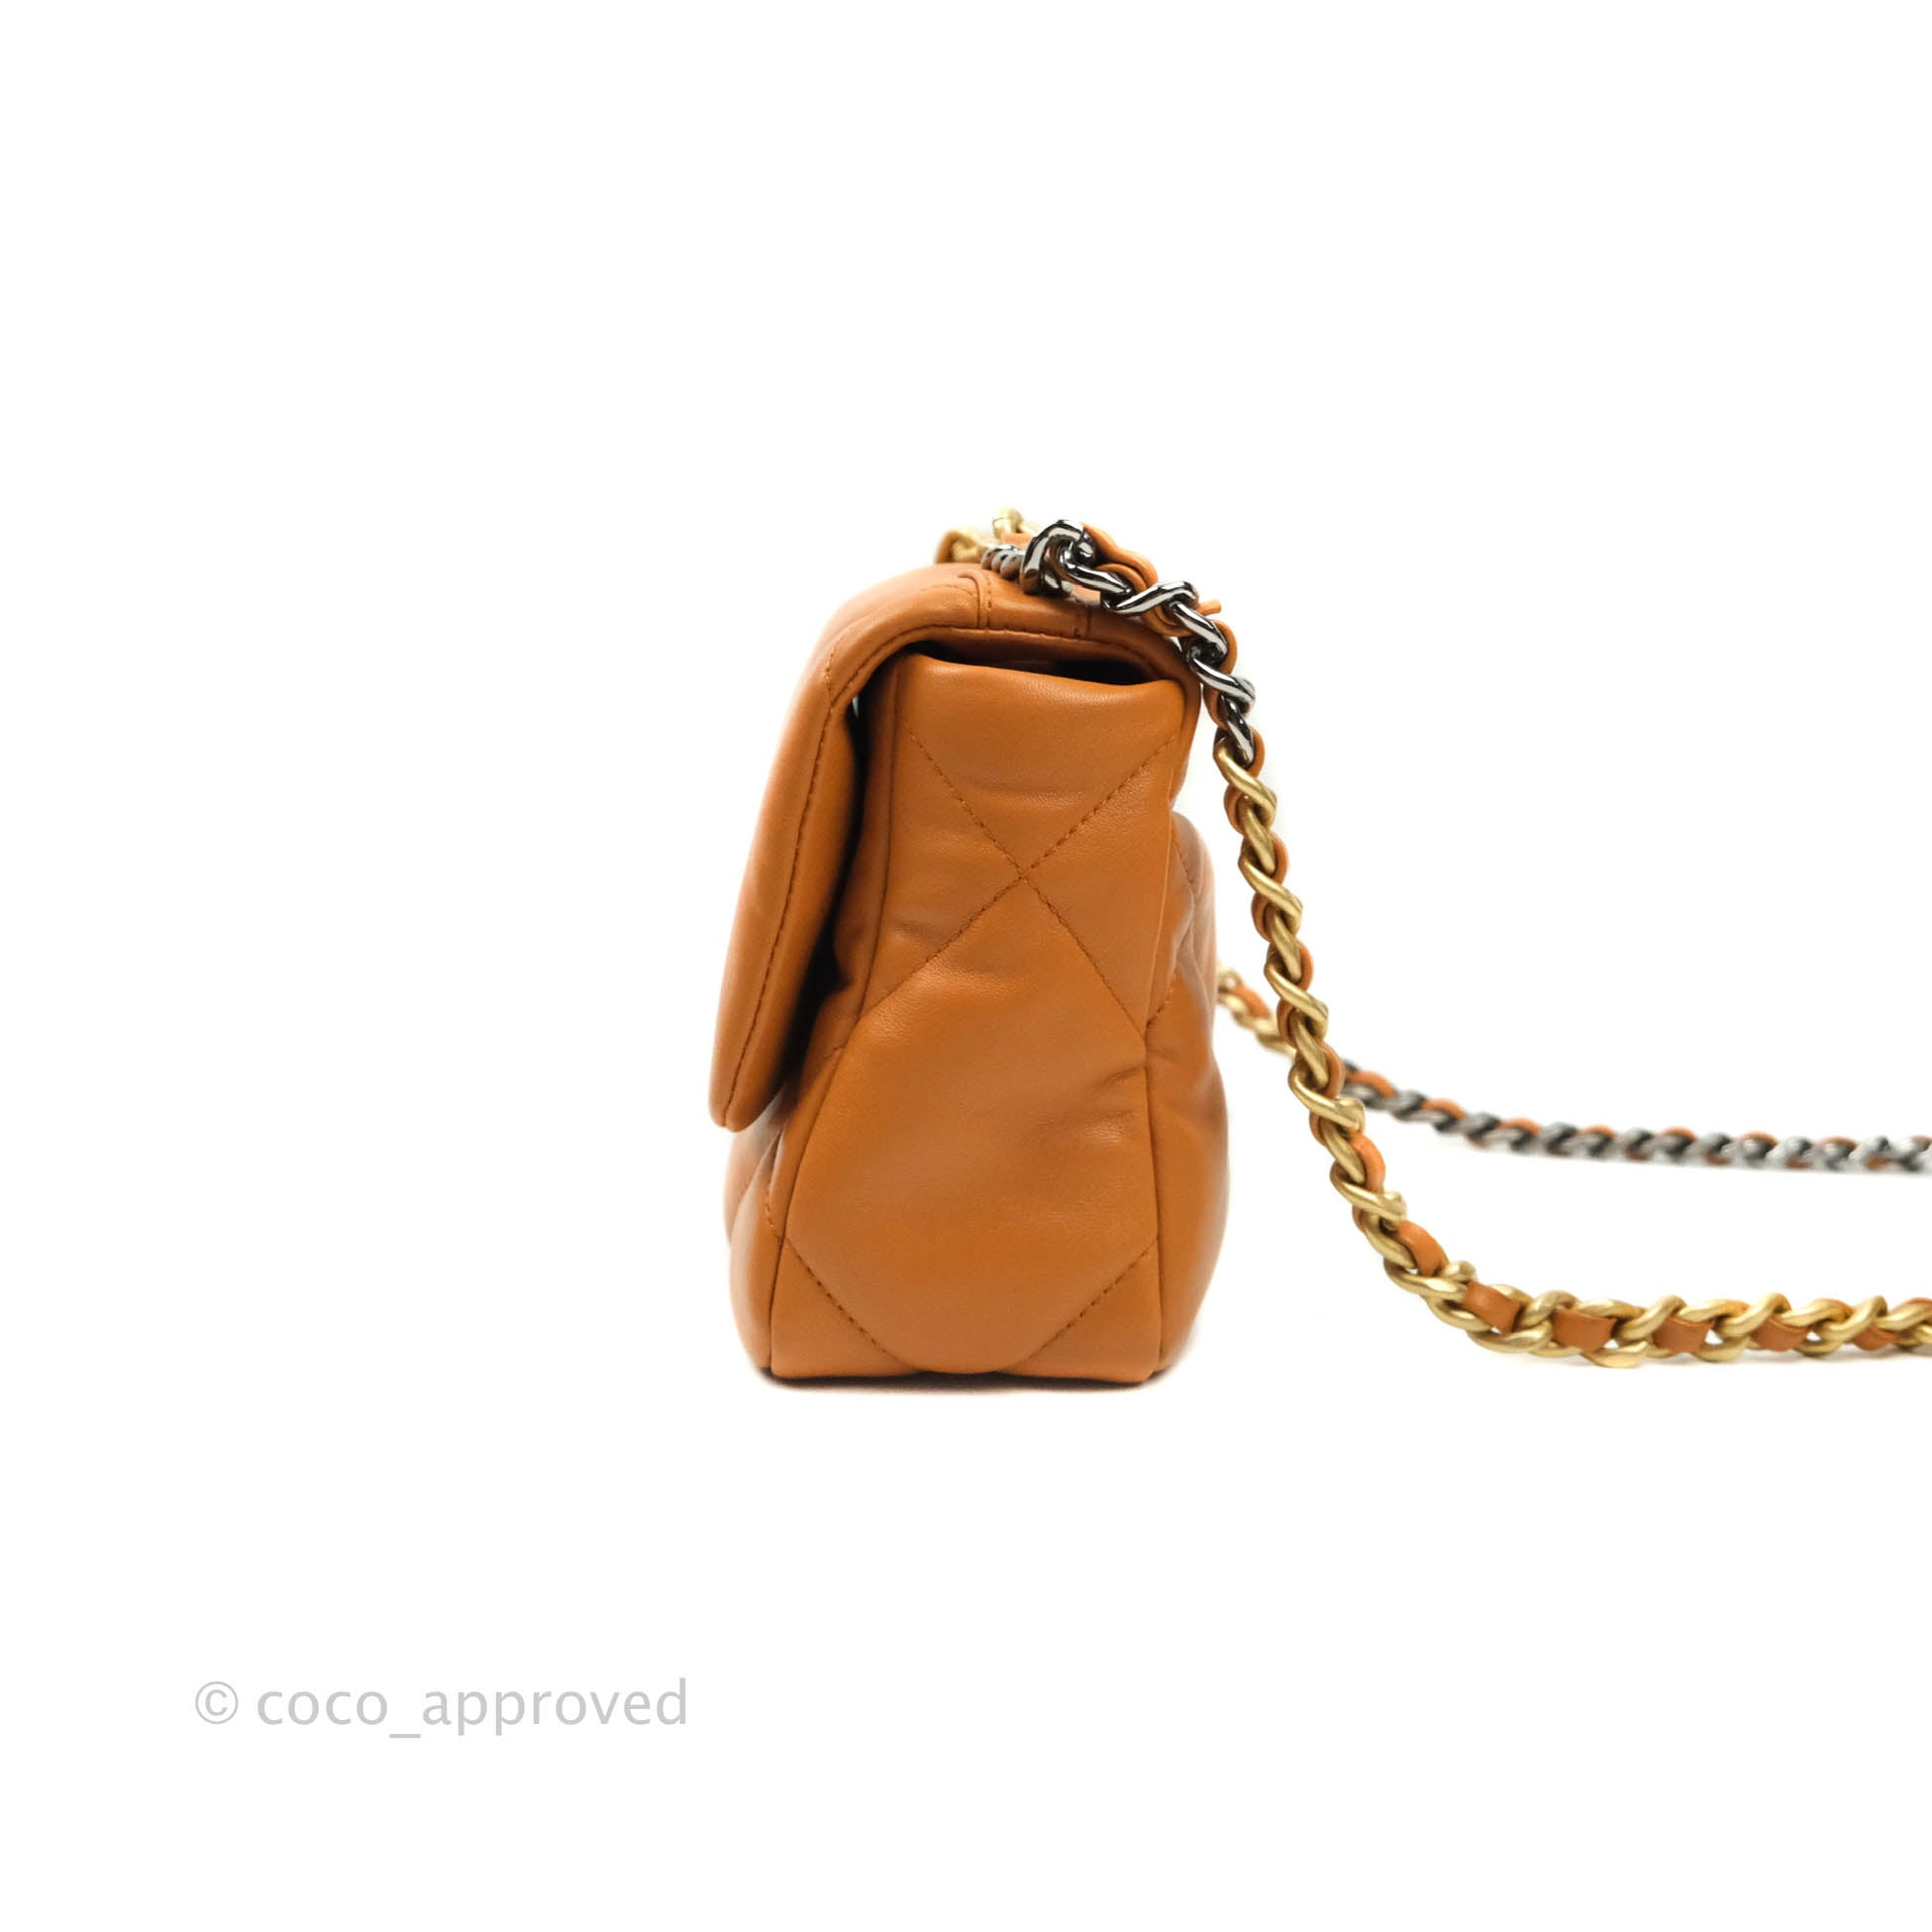 Chanel 21A Small 19 flap bag caramel brown lambskin